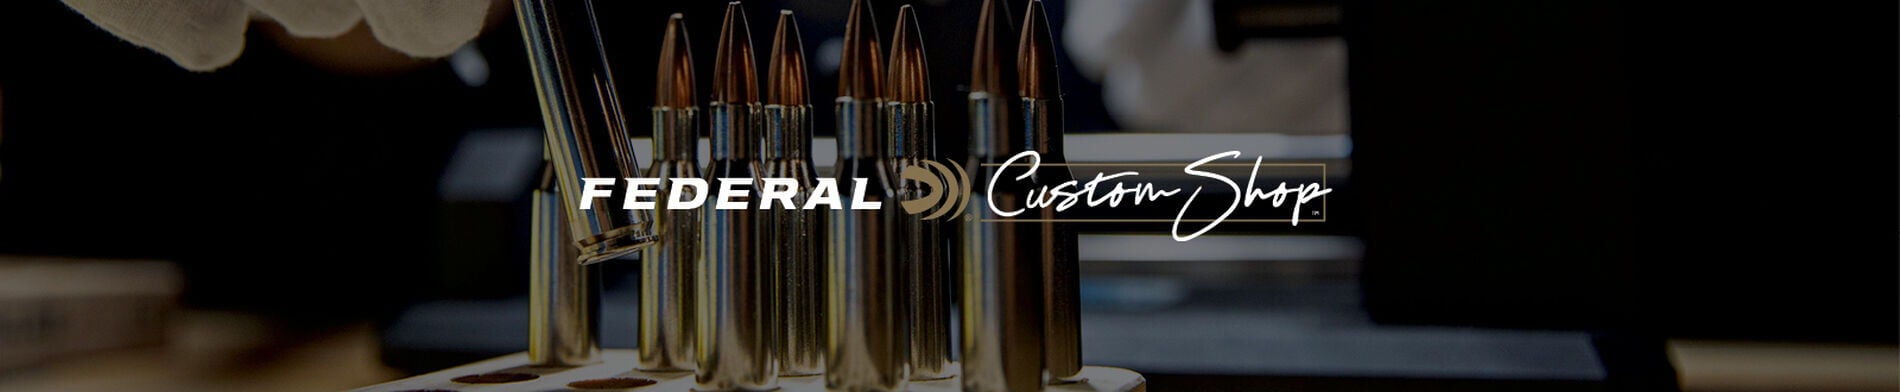 Loading Rifle with Federal Custom Shop logo